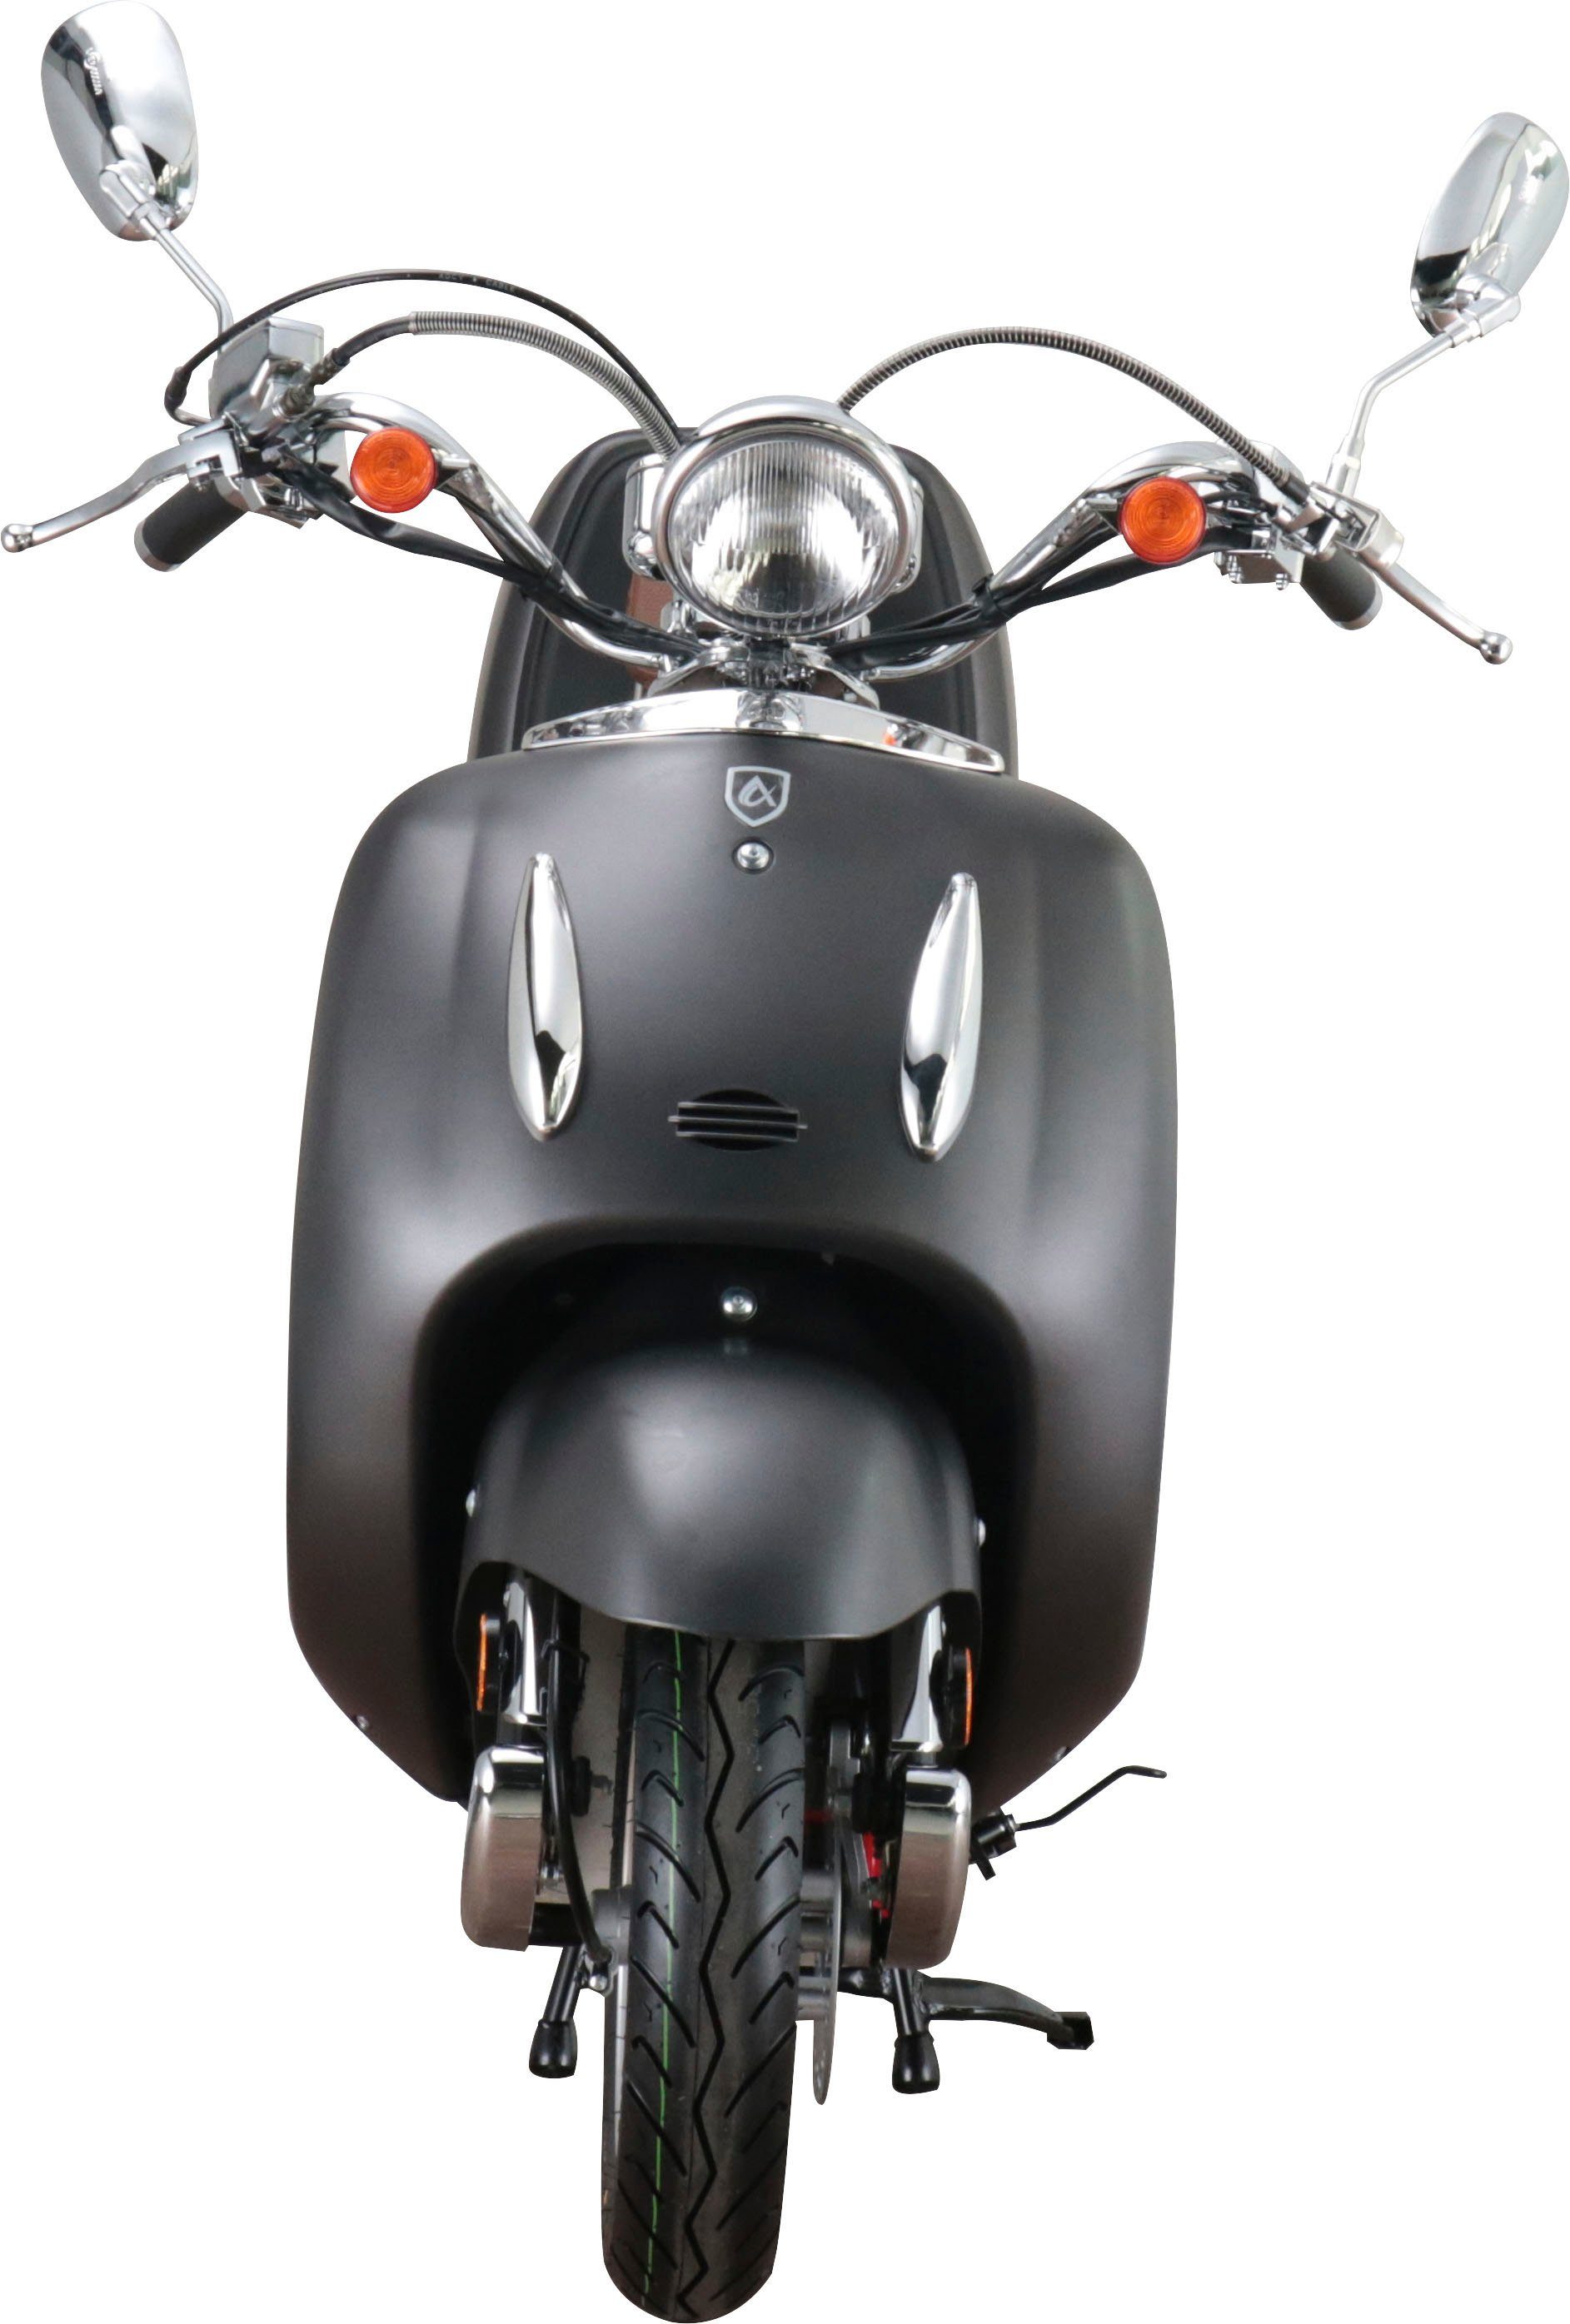 45 Retro | inkl. ccm, Alpha Firenze, Motors Euro mattschwarz 50 braun Motorroller Topcase km/h, 5,